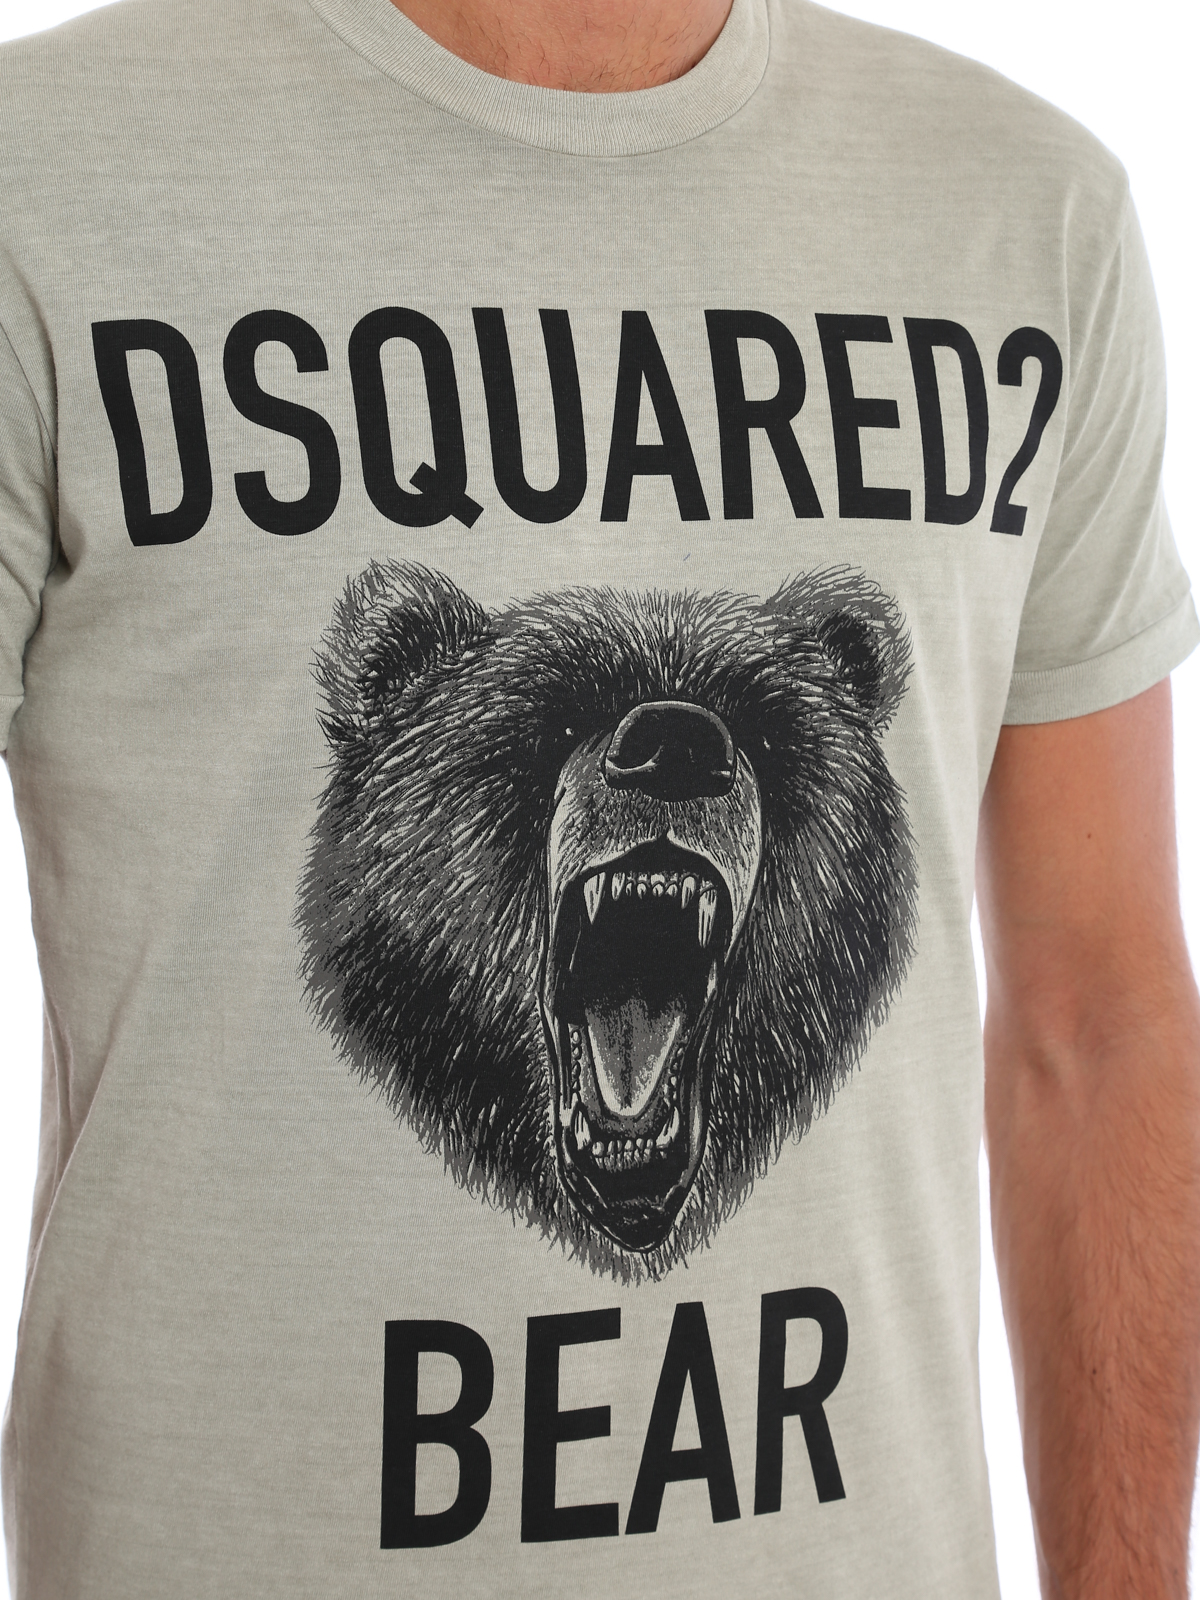 dsquared bear